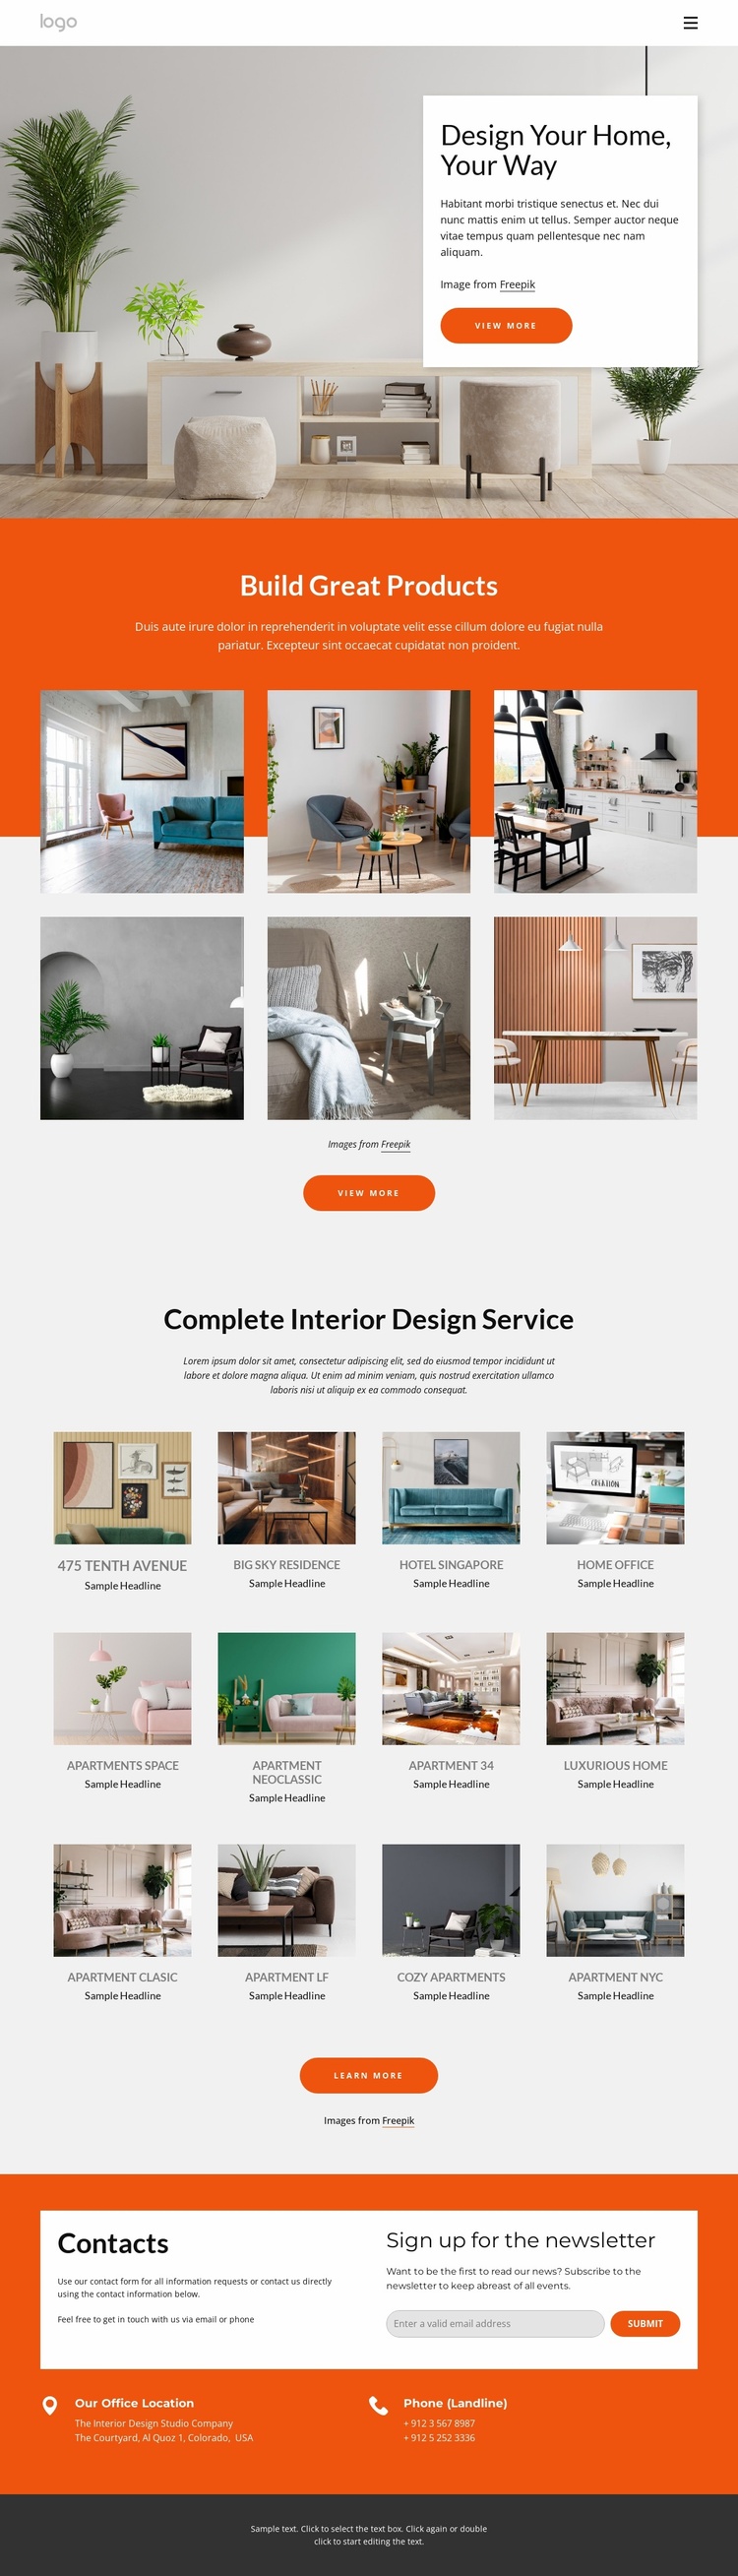 Interior design portfolio Landing Page